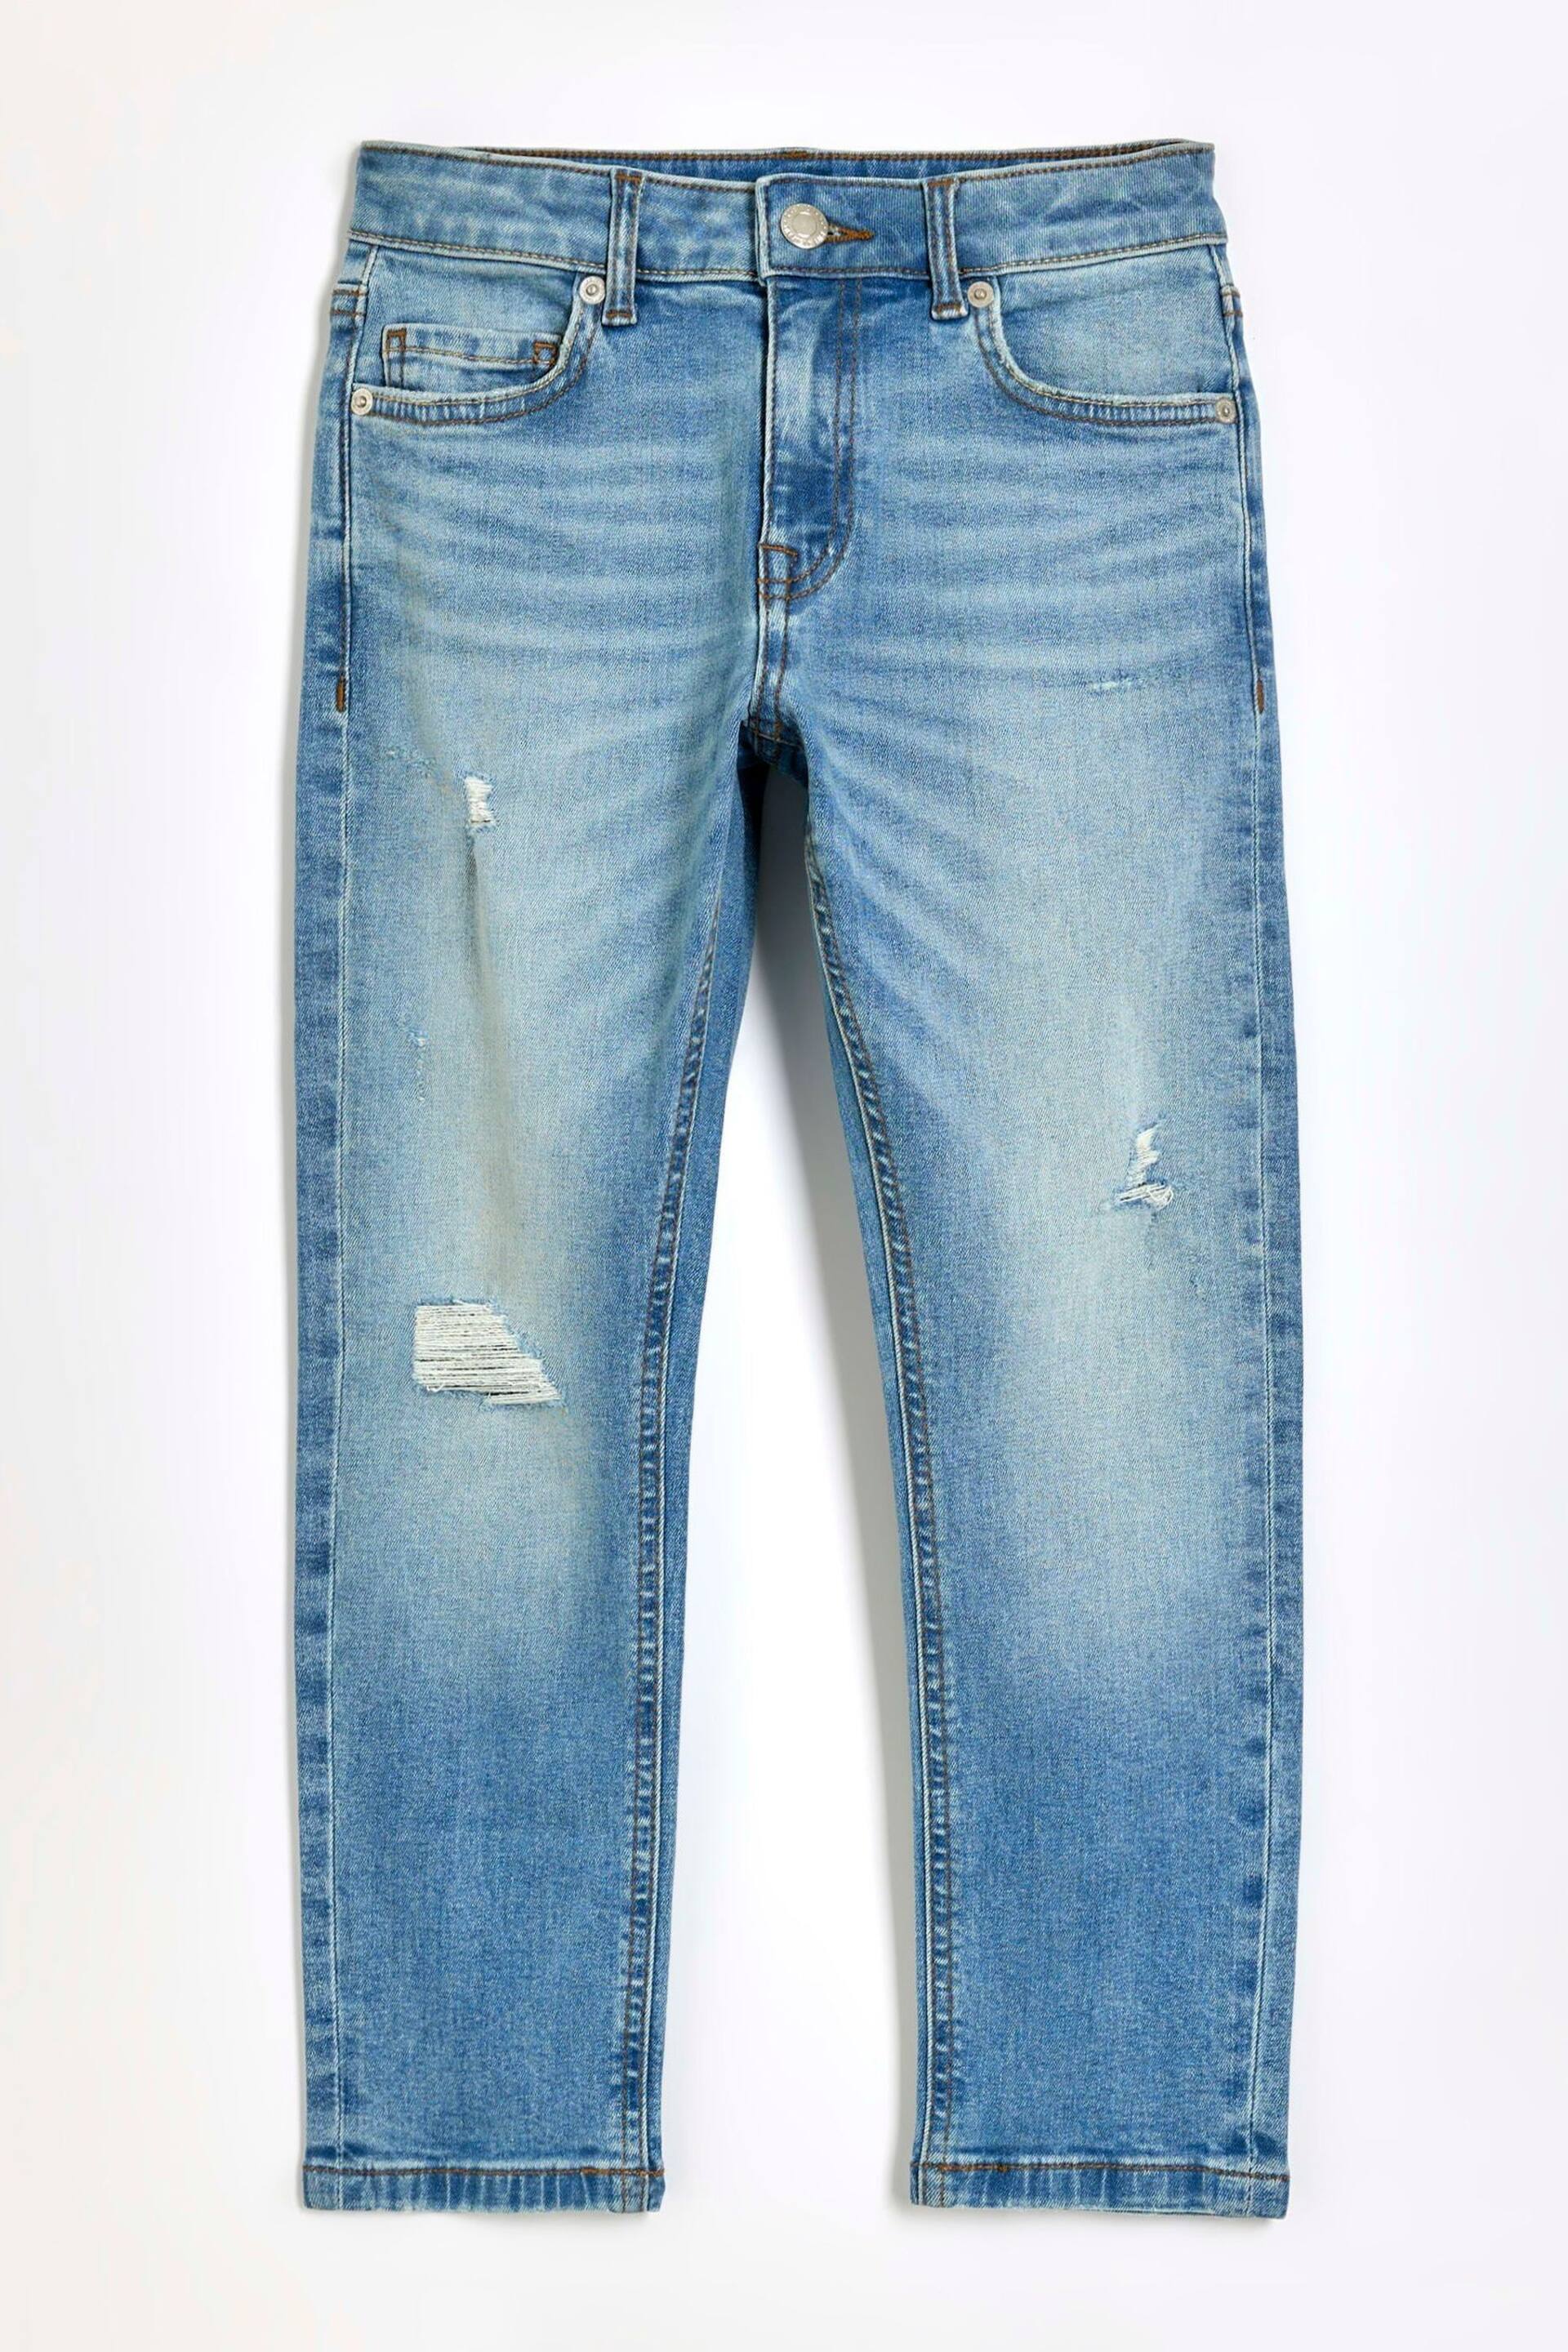 River Island Blue Boys Denim Mid Wash Jeans - Image 1 of 6